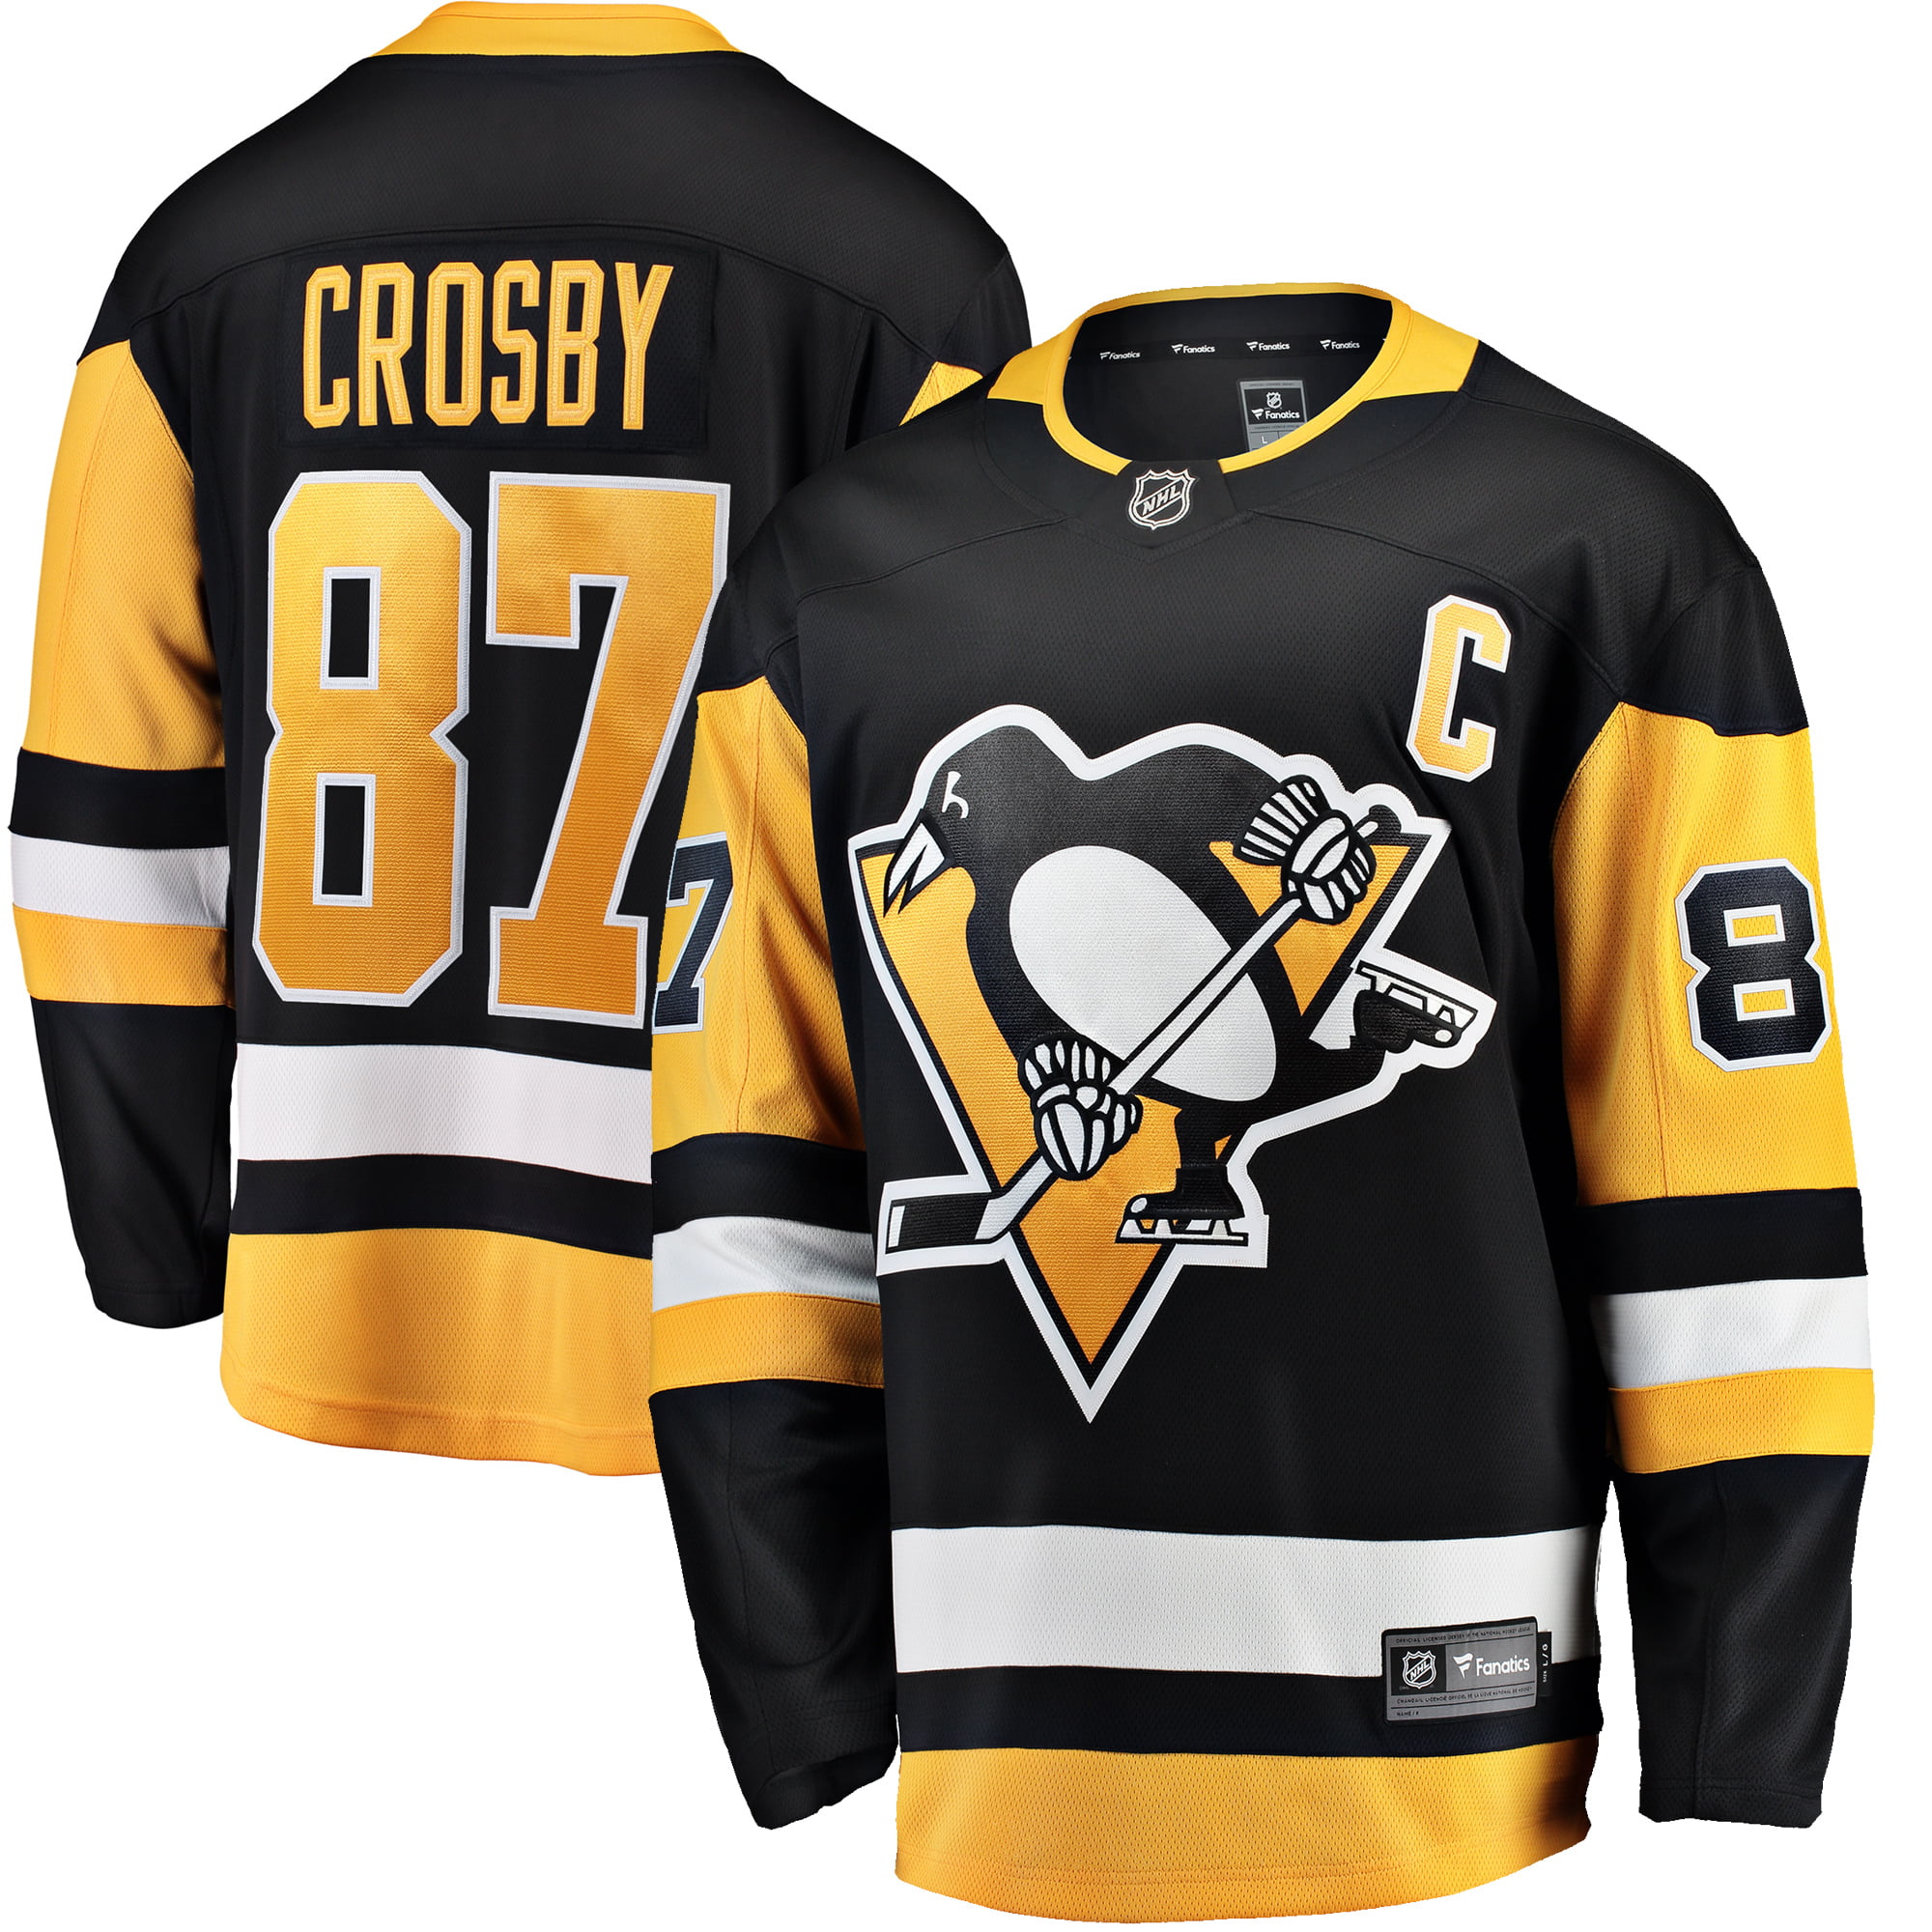 REEBOK Pittsburgh Penguins Player Locker Room Compression Shirt Black White XL 